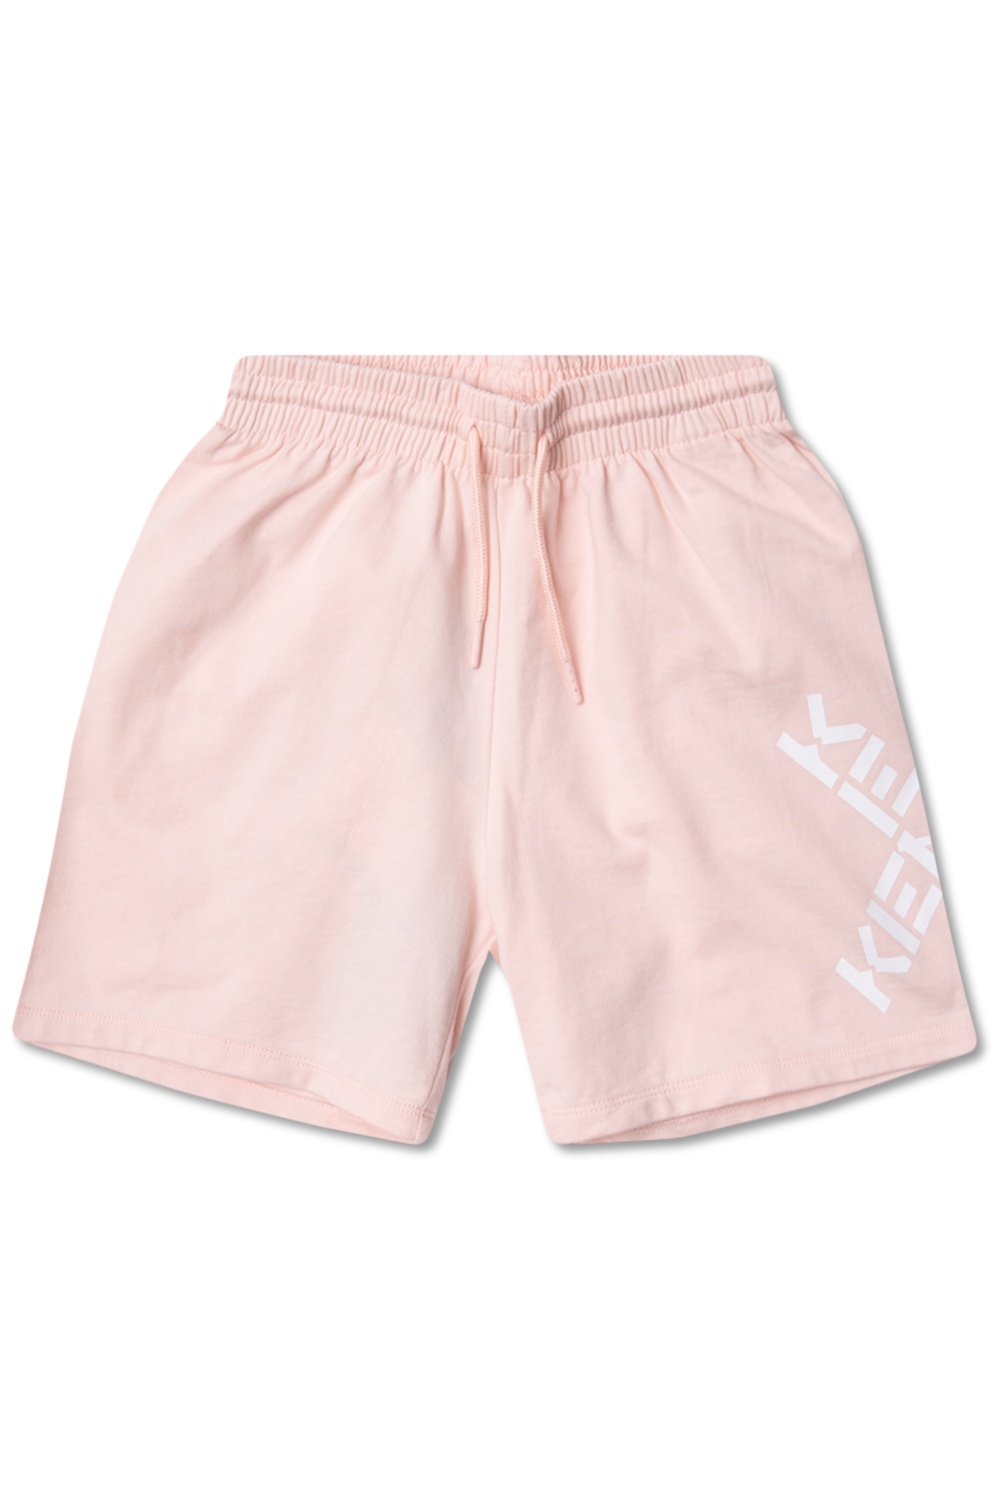 Kenzo Kids logo-print cotton bermuda shorts - White